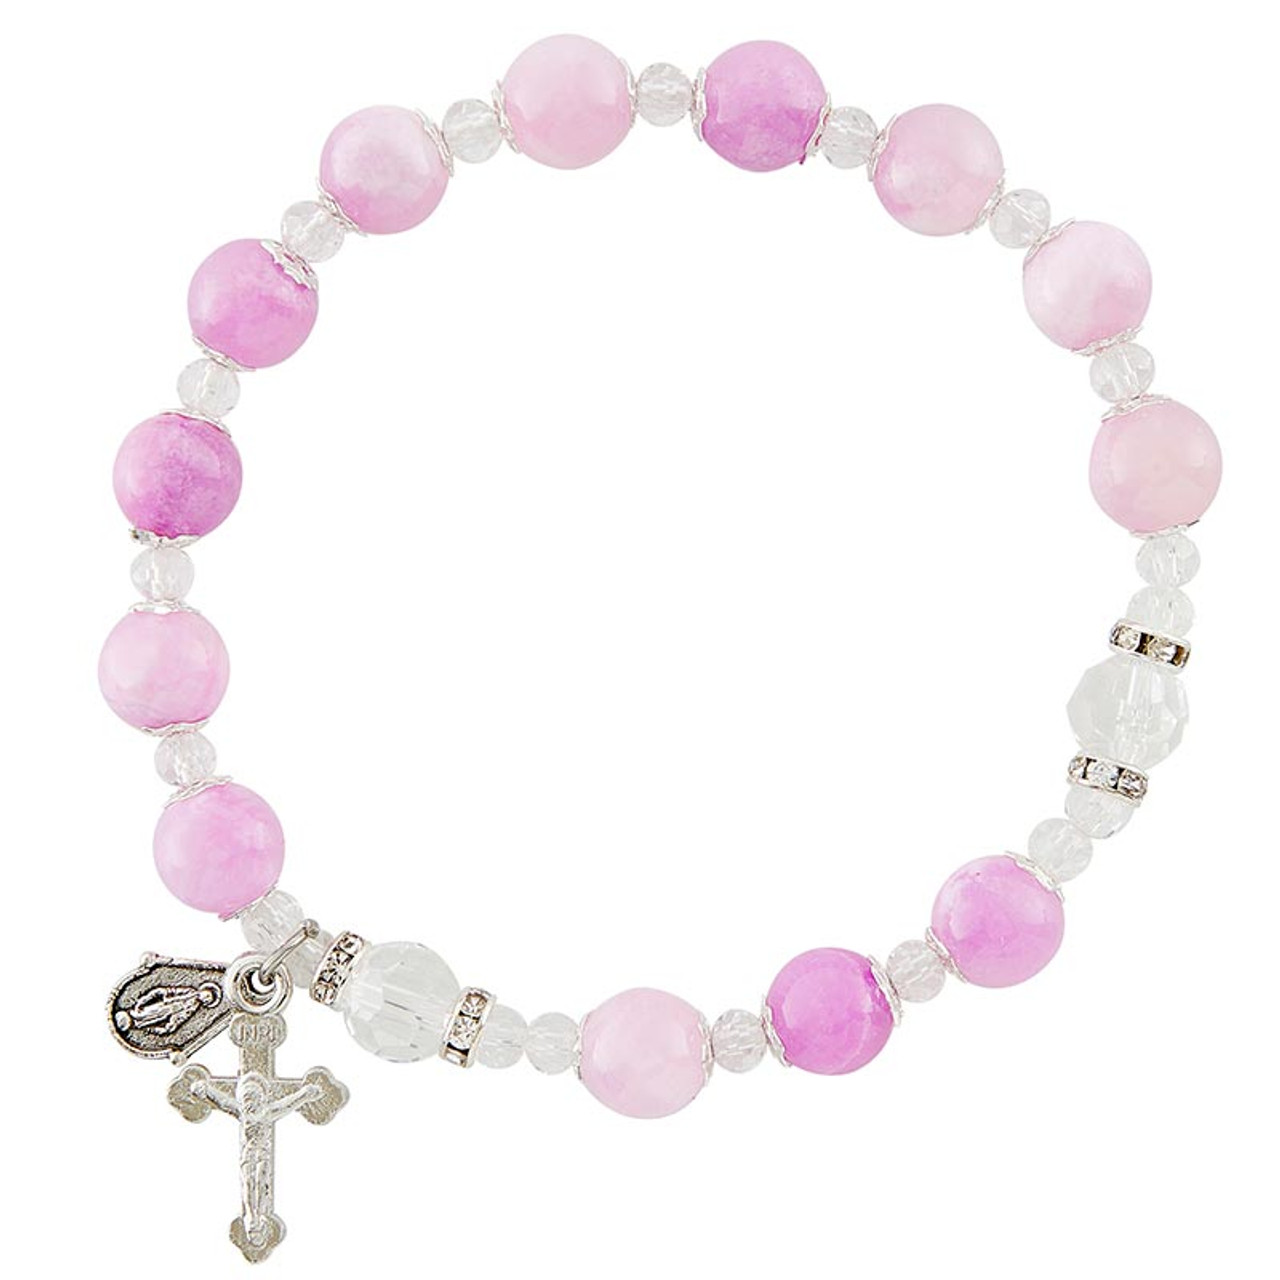 Pink Jade Stone Rosary Bracelet - 6/pk - [Consumer]Autom